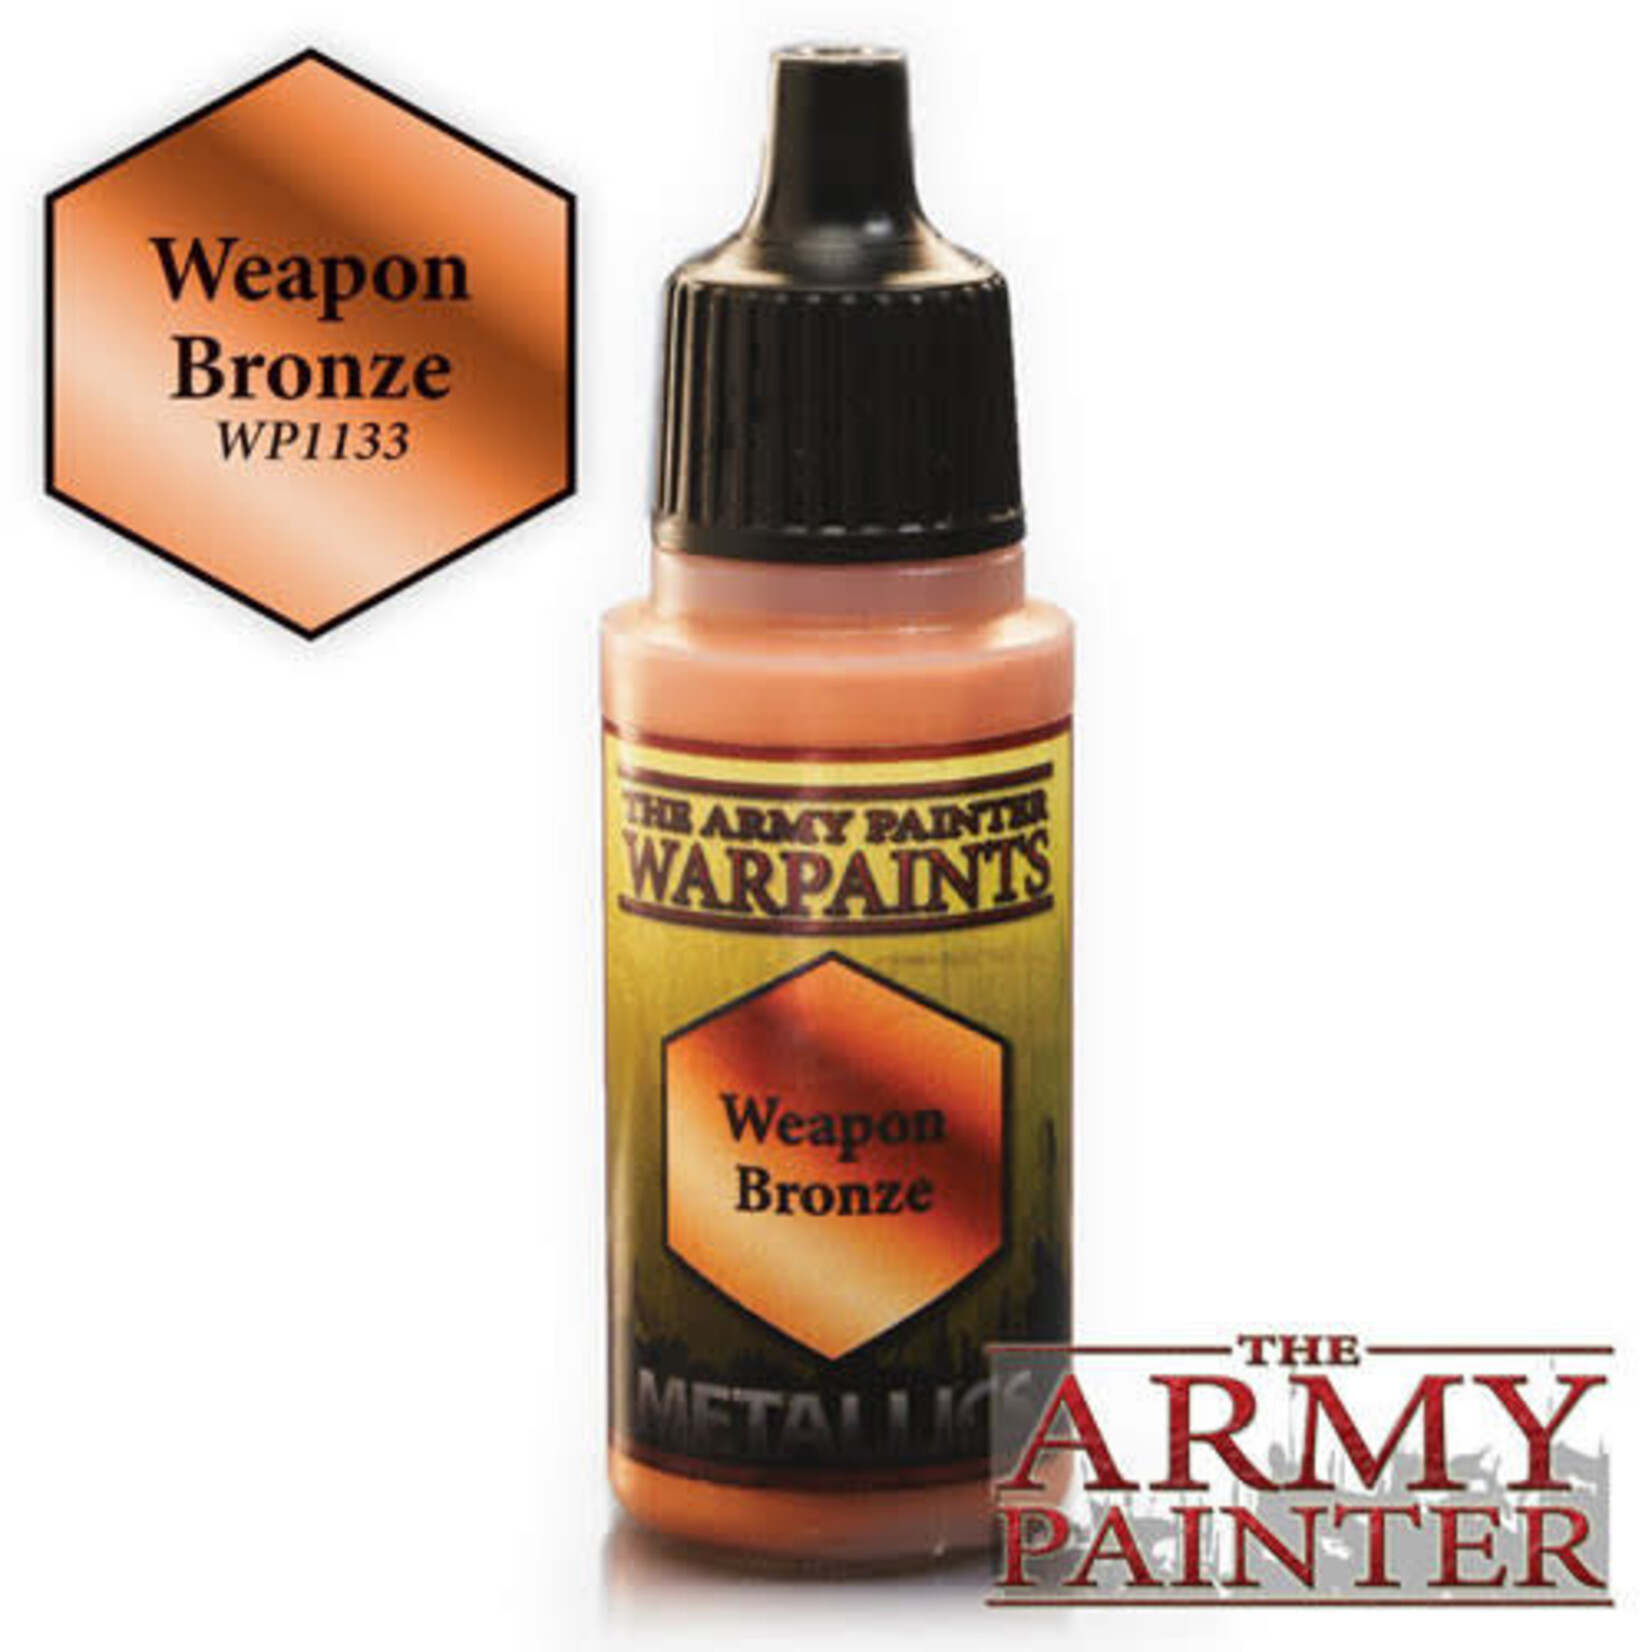 The Army Painter Warpaints: Weapon Bronze 18ml